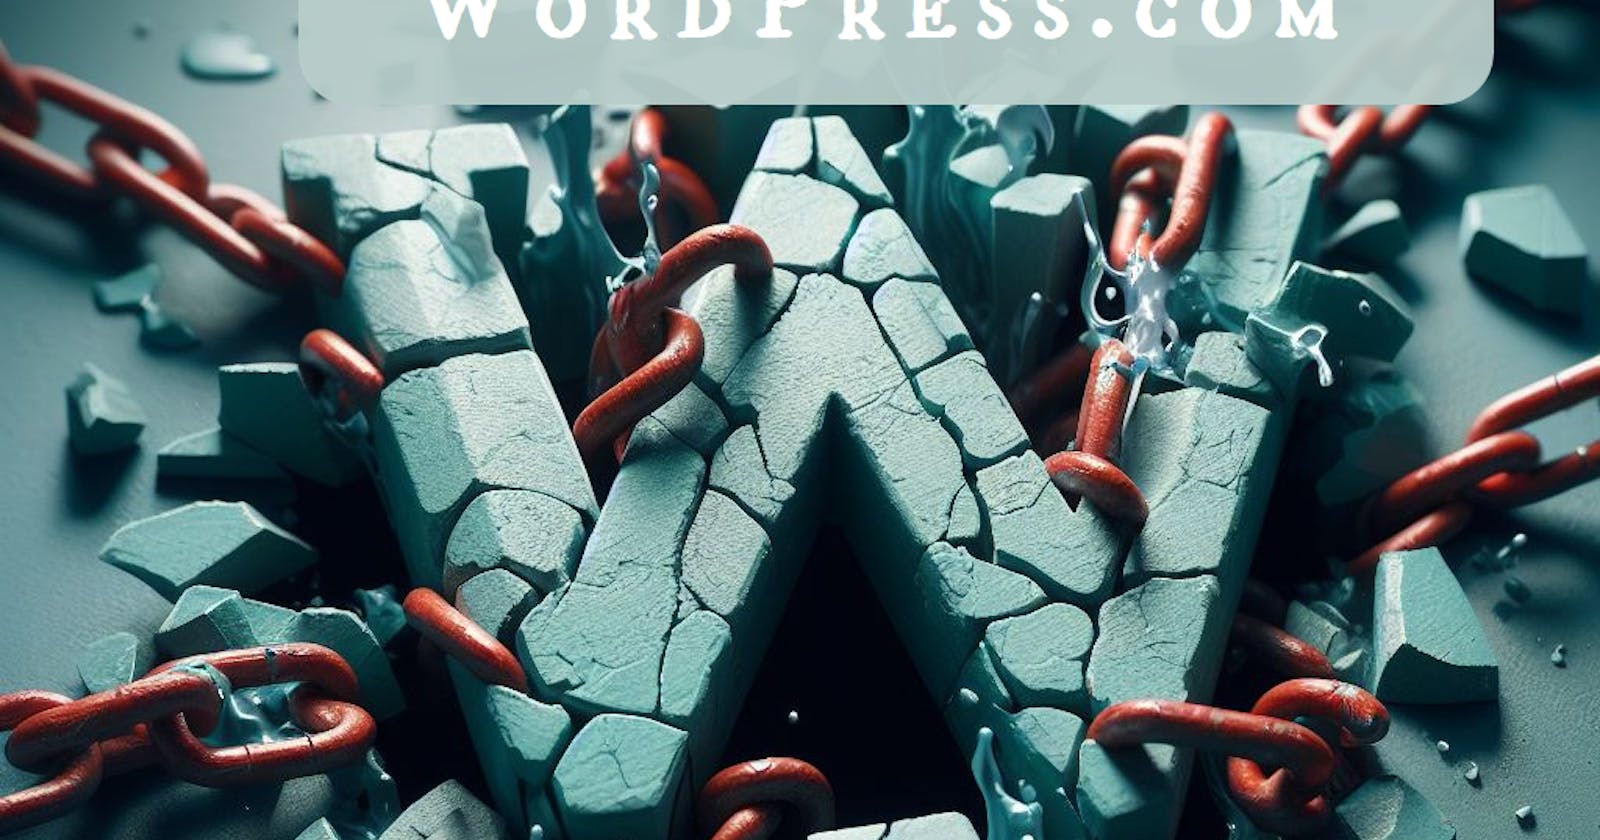 Convert the WordPress.com site to a Hashnode blog.